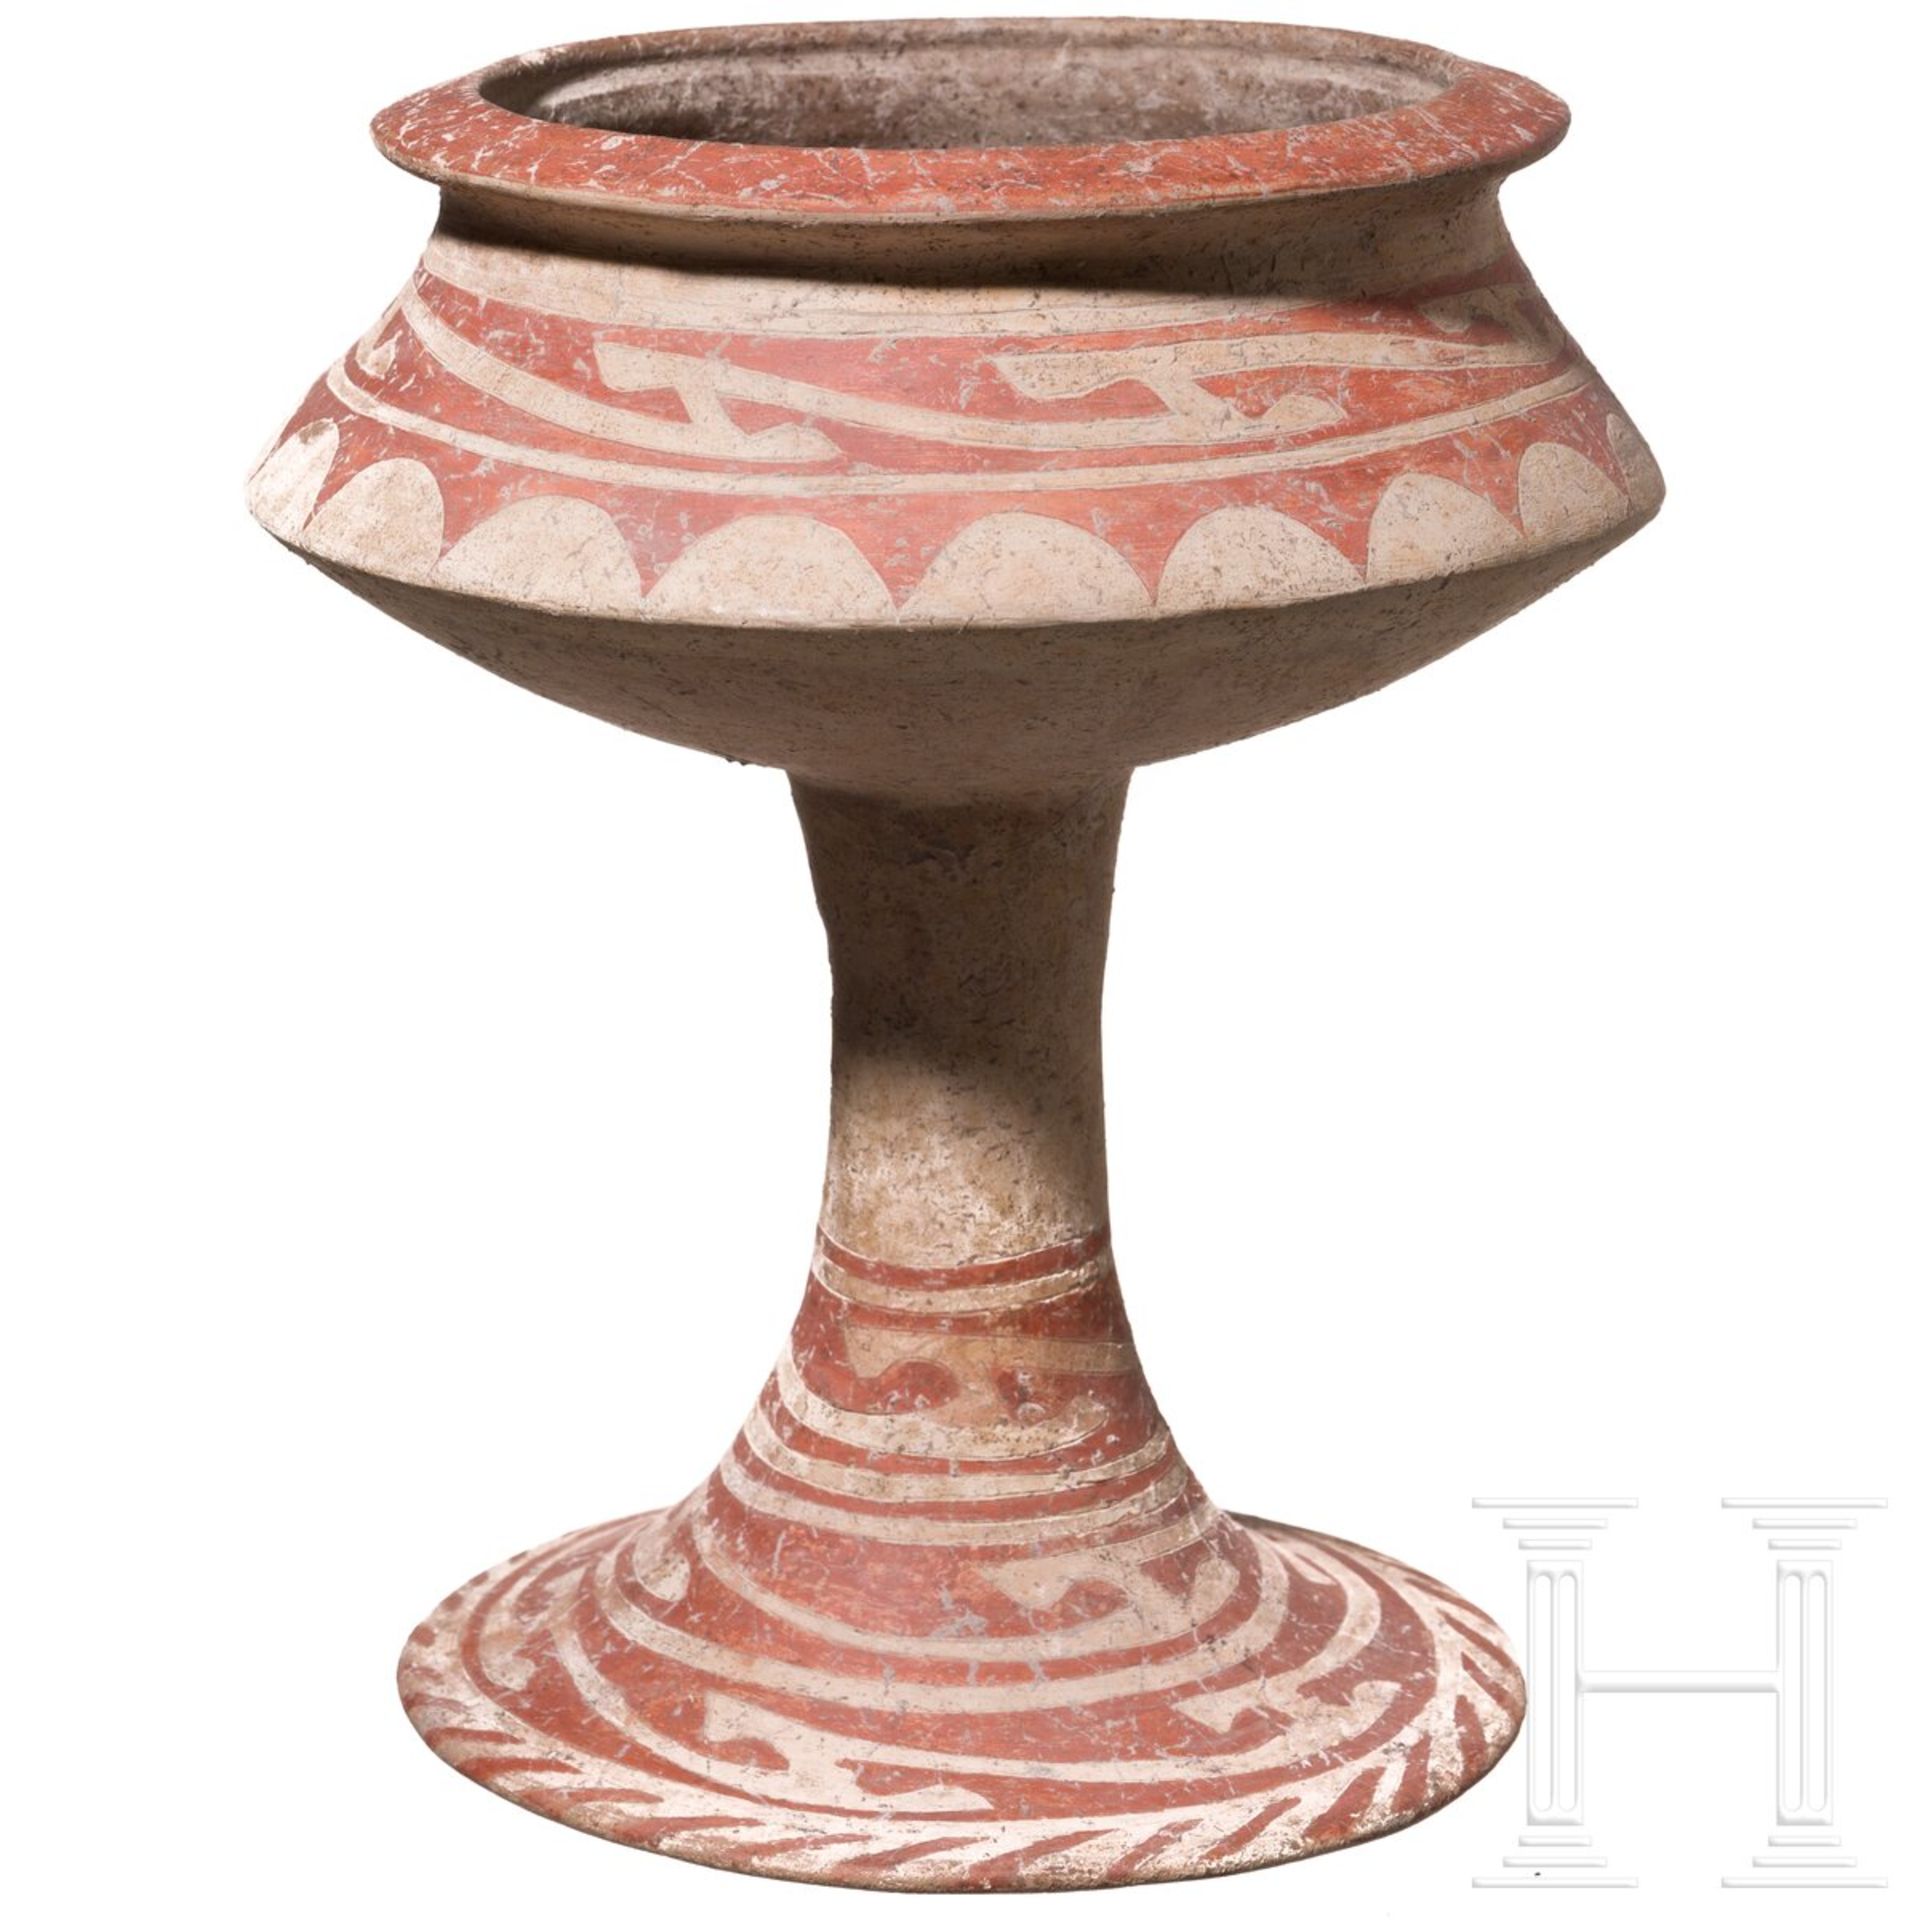 Große Vase, China, Yangshao-Kultur, 3000 - 2000 v. Chr. 